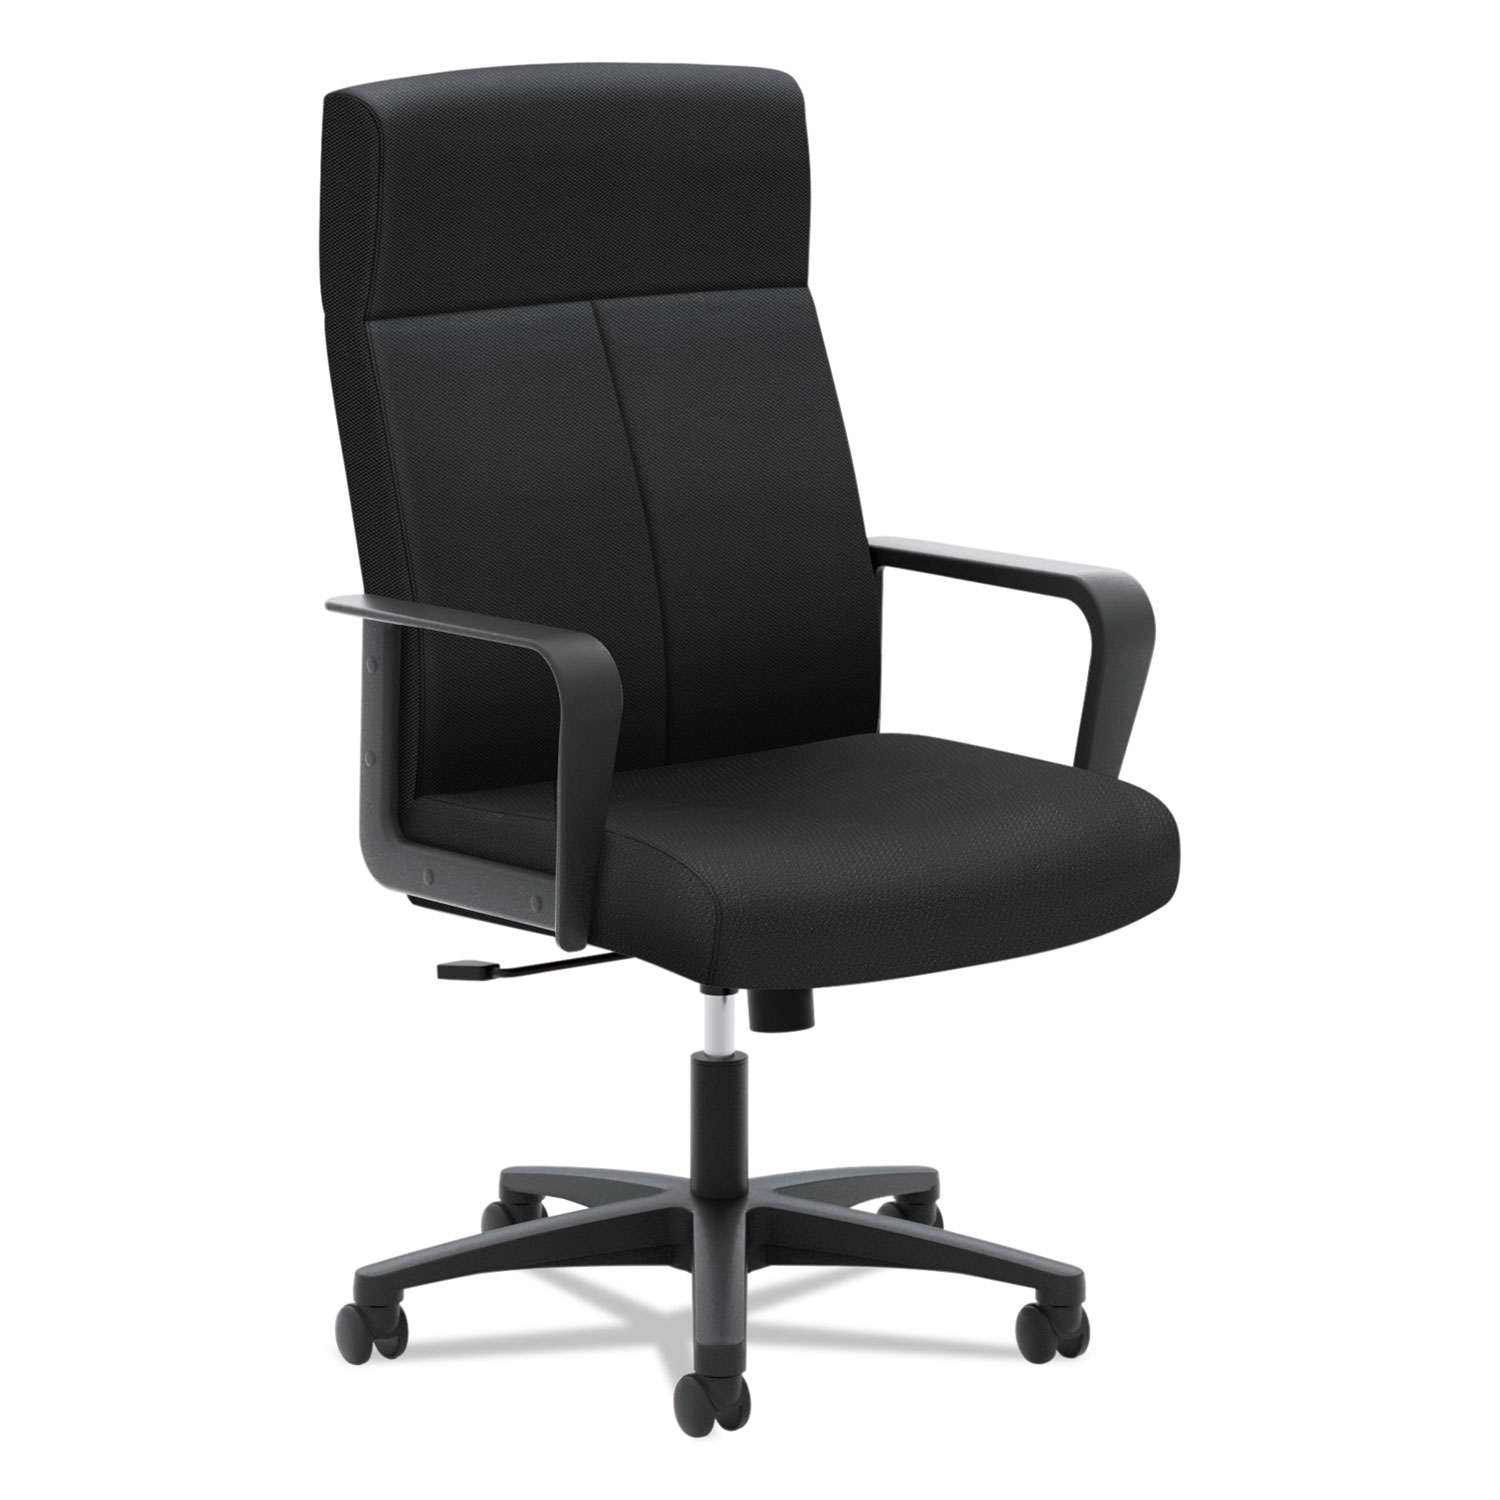 VL604 Series High-Back Executive Chair, Black Fabric